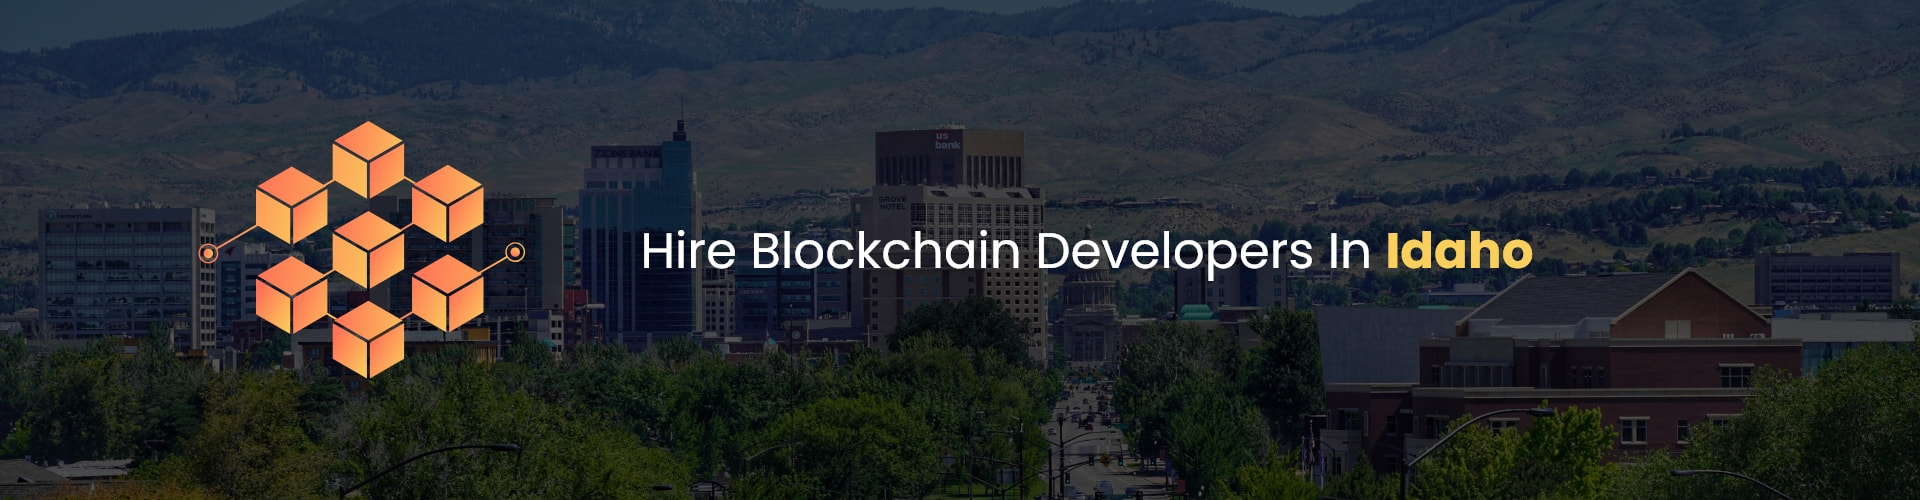 hire blockchain developers in idaho